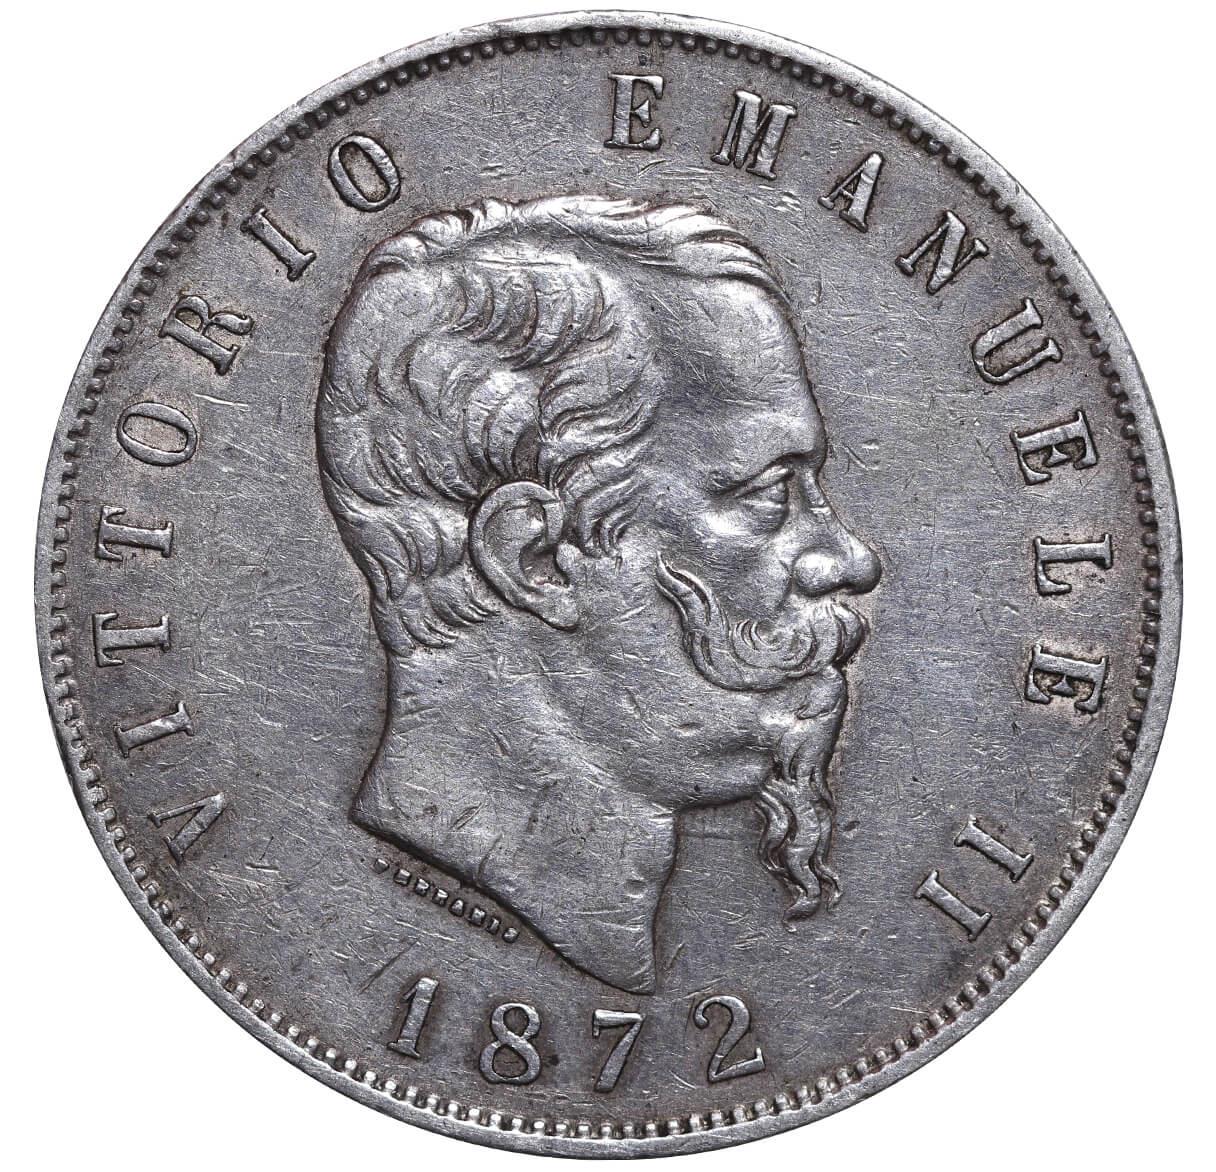 Italy, 5 Lire, 1872 year, M-B - Image 2 of 3